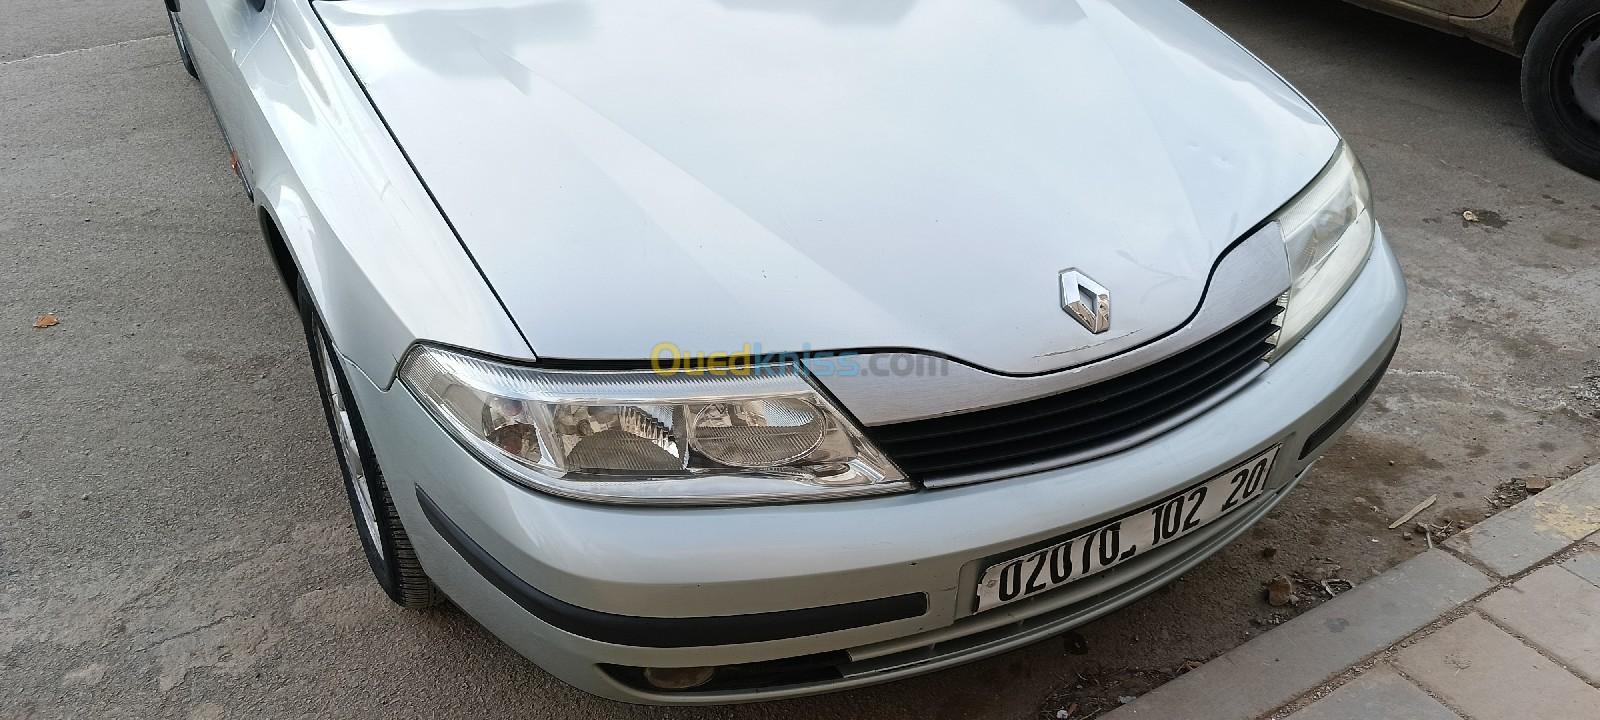 Renault Laguna 2 2002 Expression